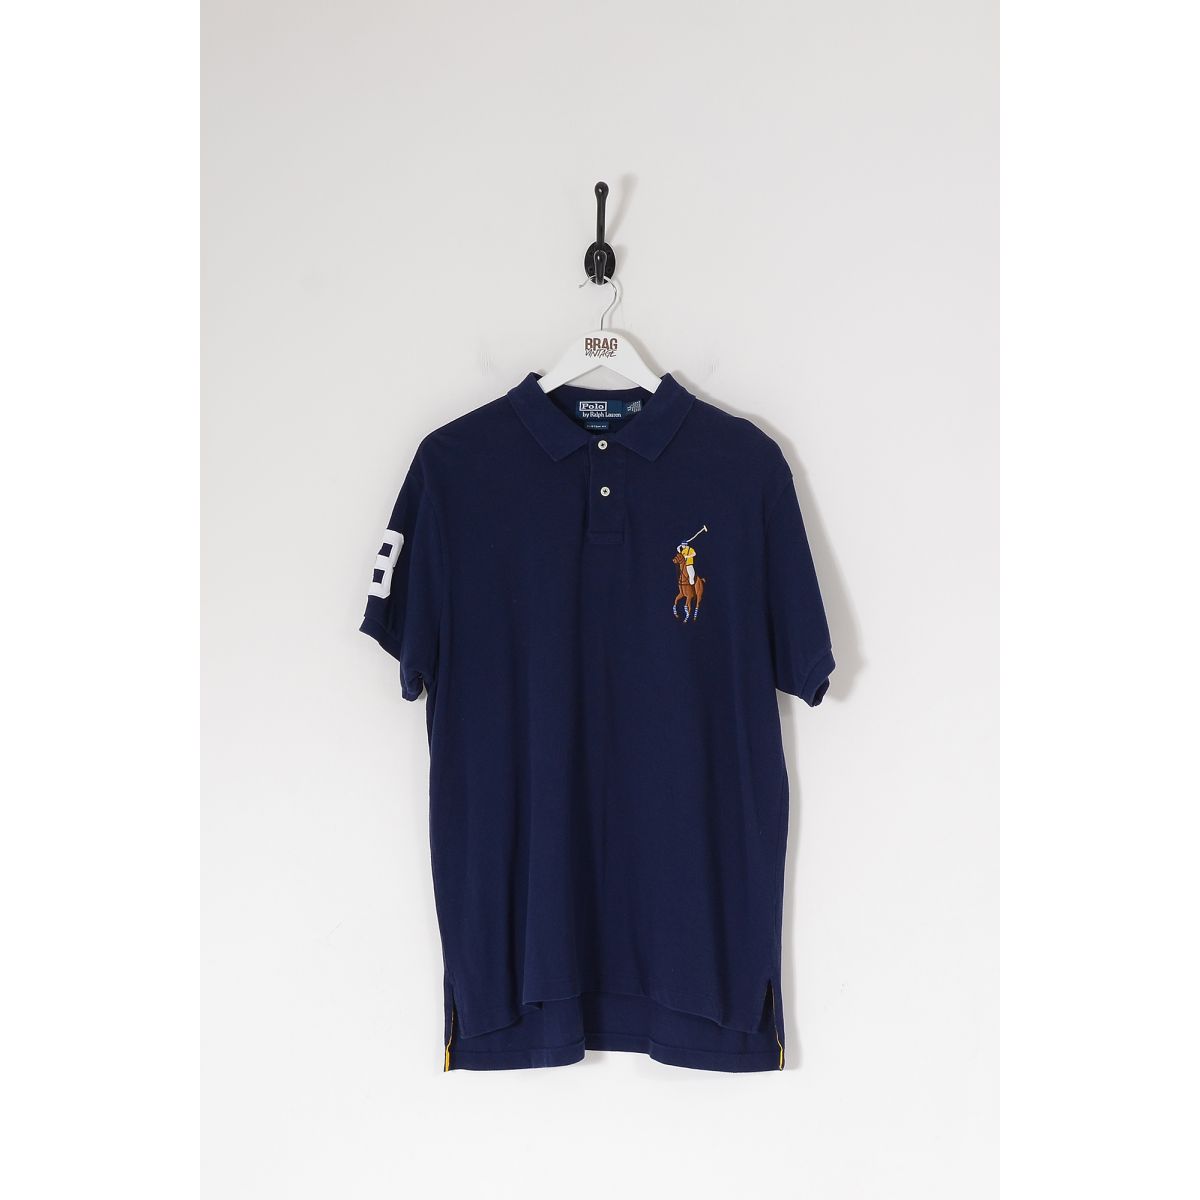 Vintage RALPH LAUREN Embroidered Polo Shirt Navy Blue XL